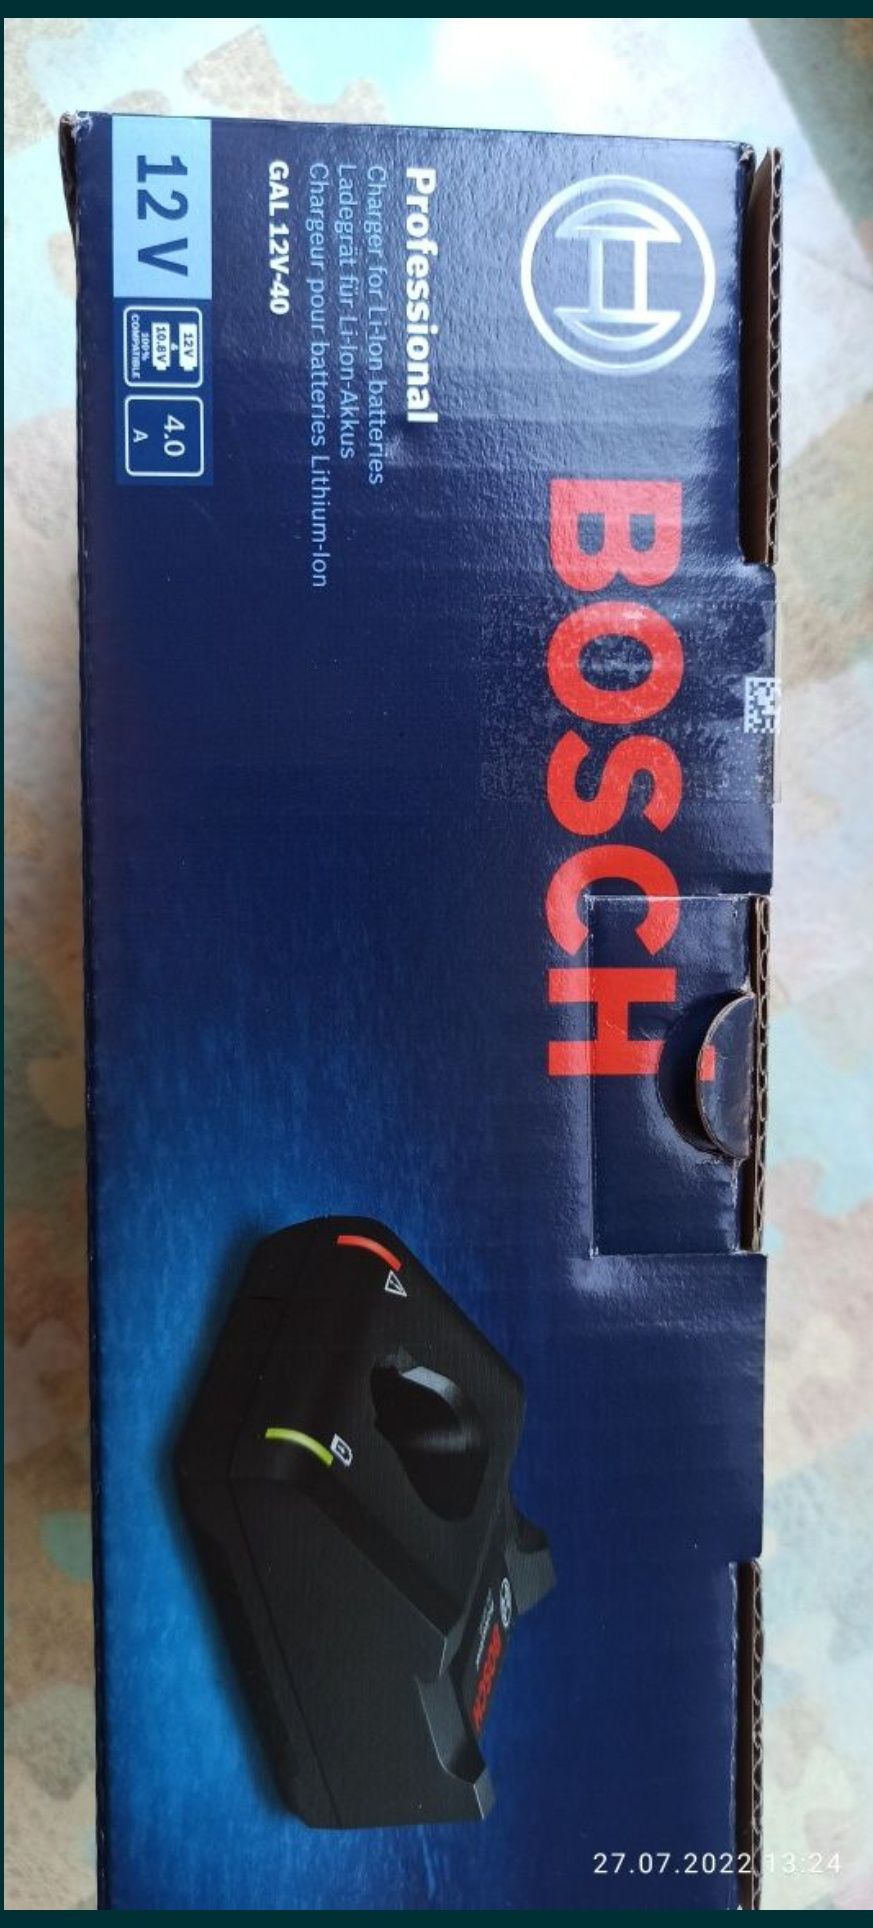 Зарядное устройство Bosch